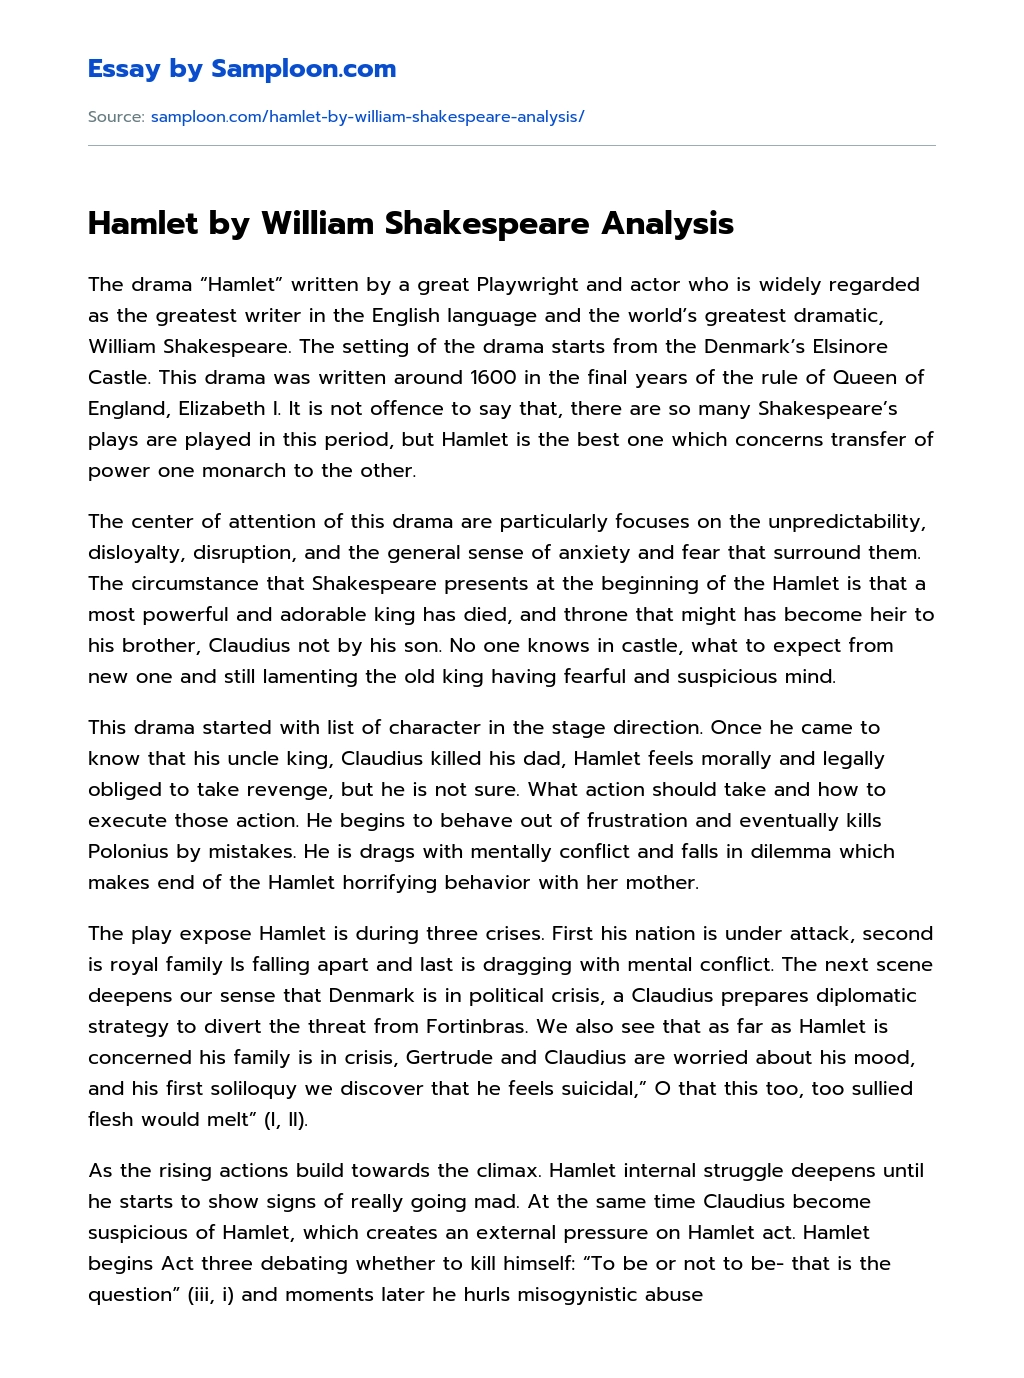 Hamlet by William Shakespeare Analysis essay